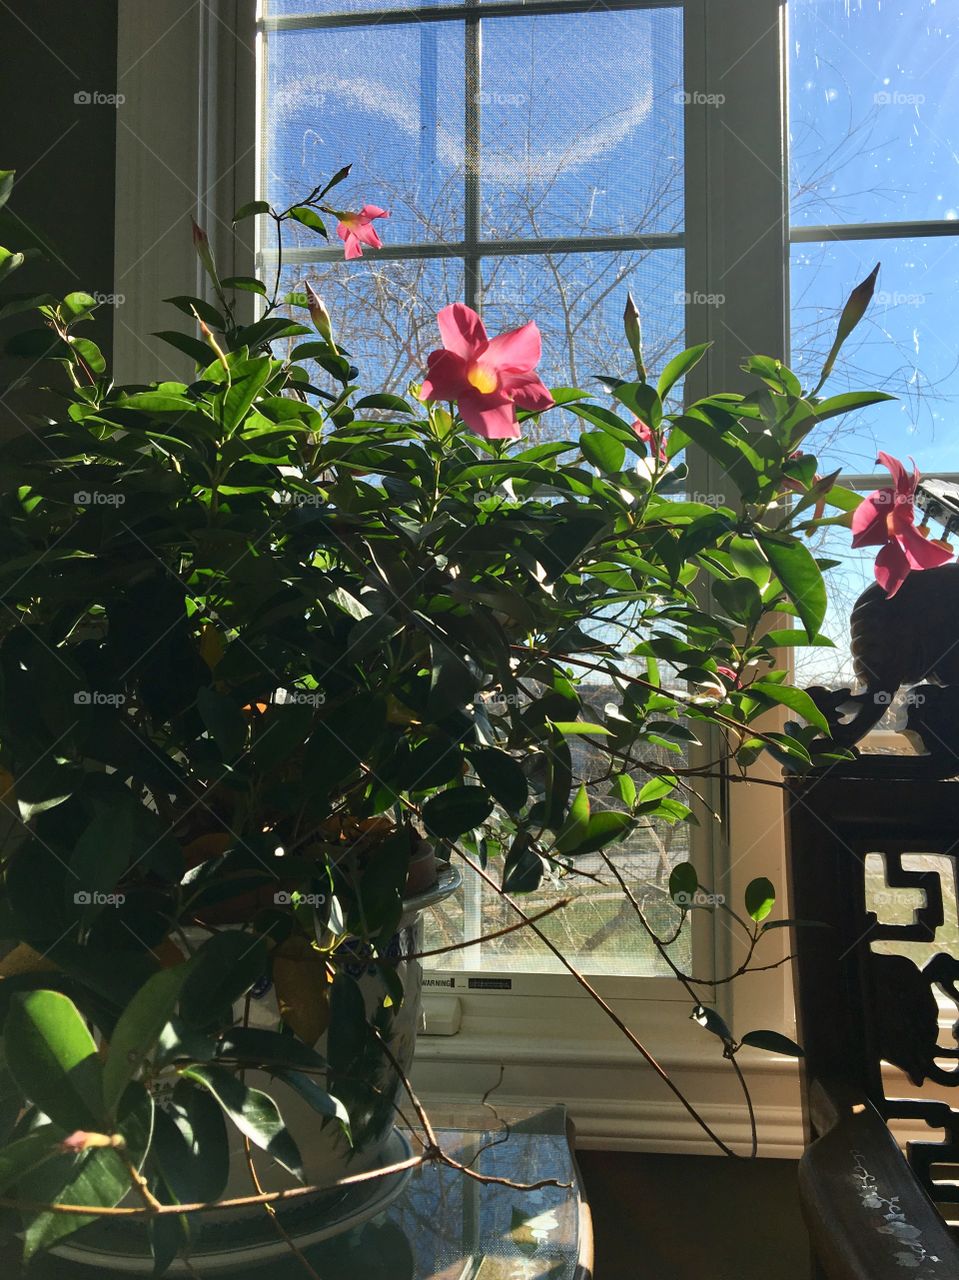 Sunlight on Plant